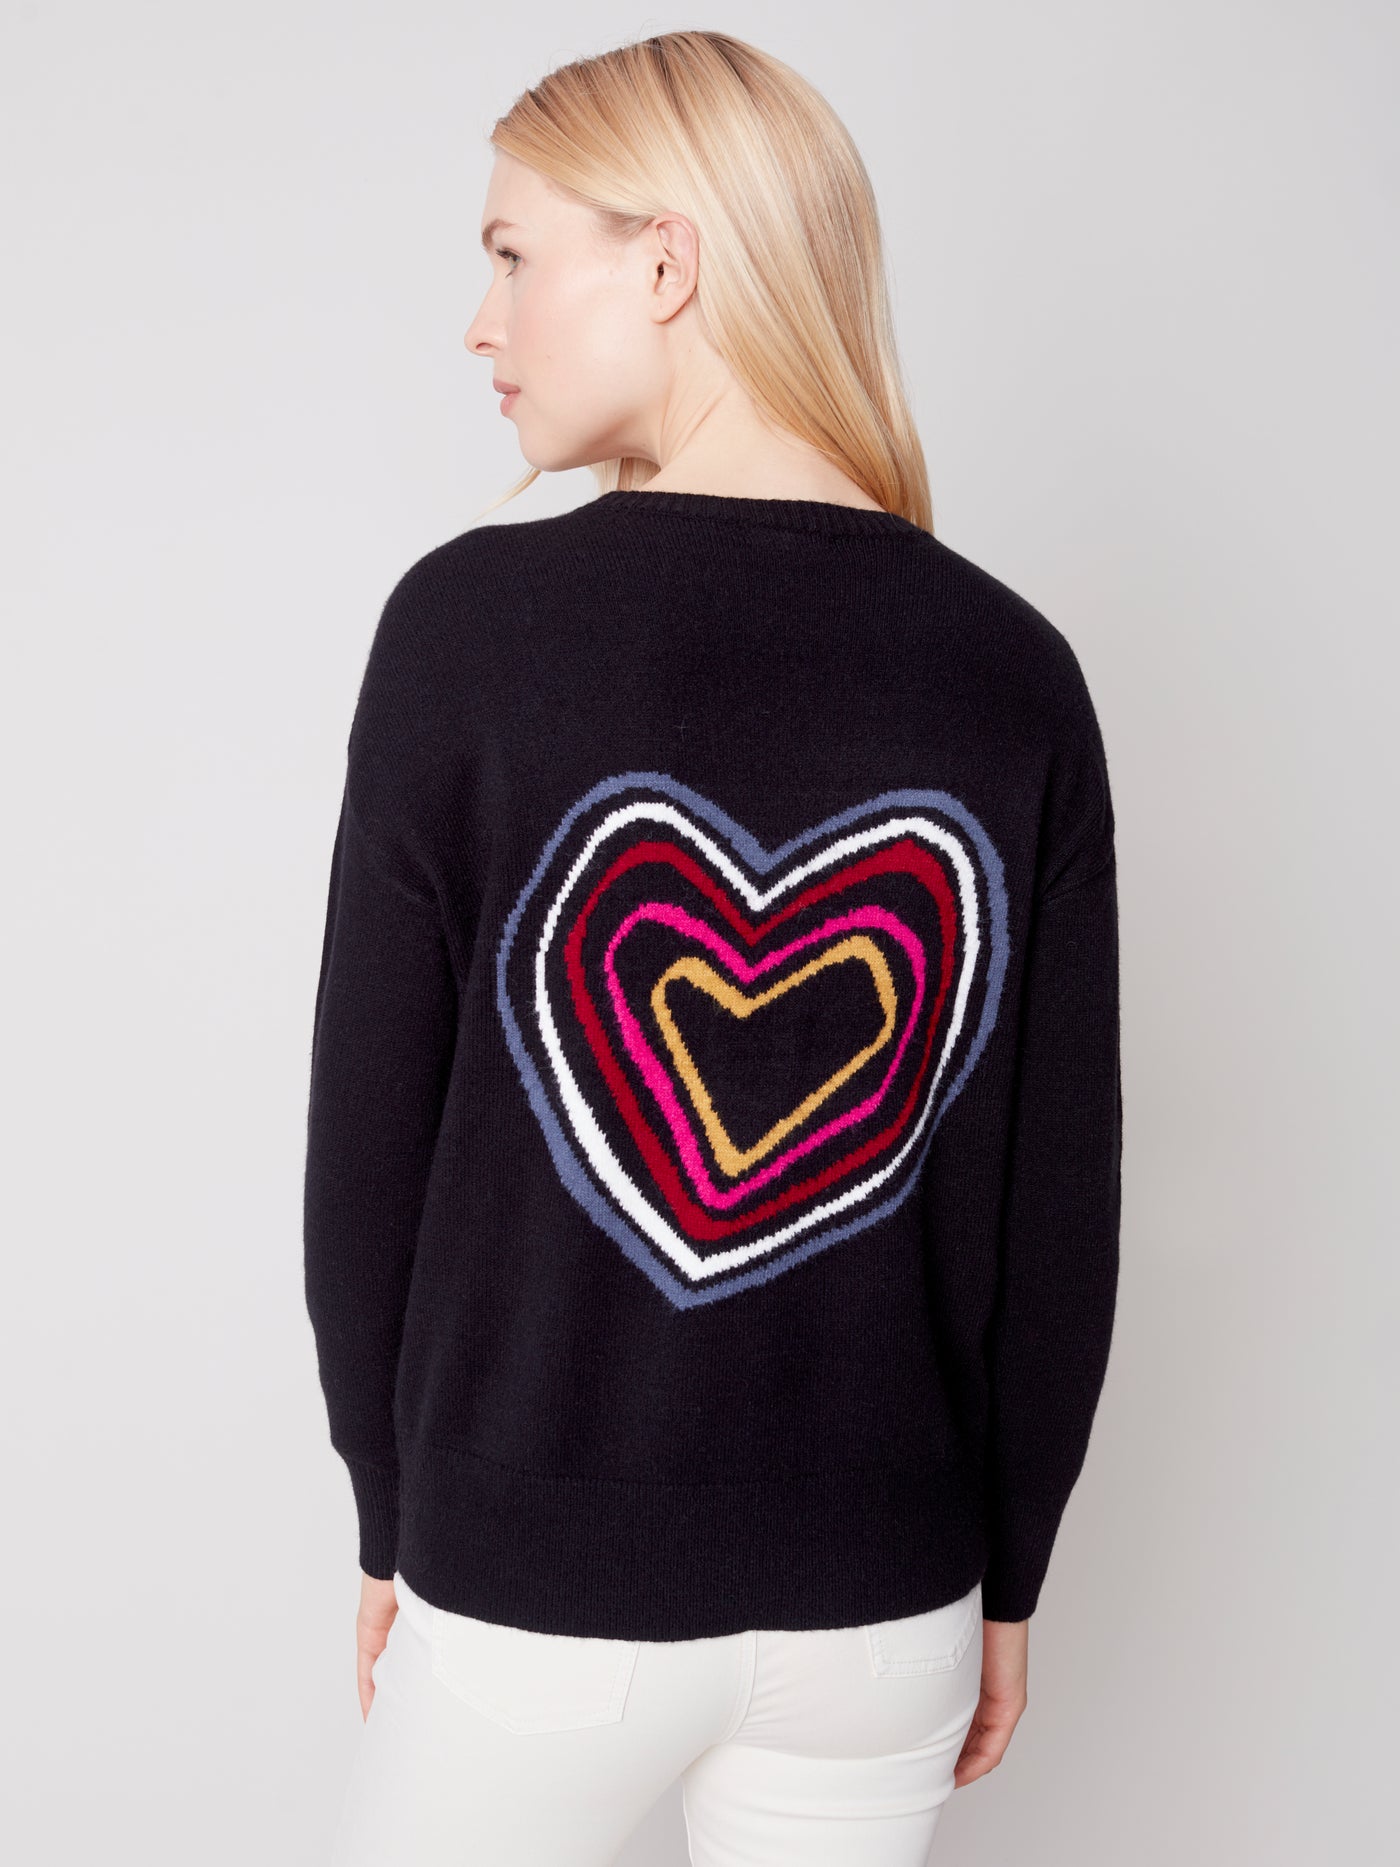 Charlie B Top - Heart Sweater - Black